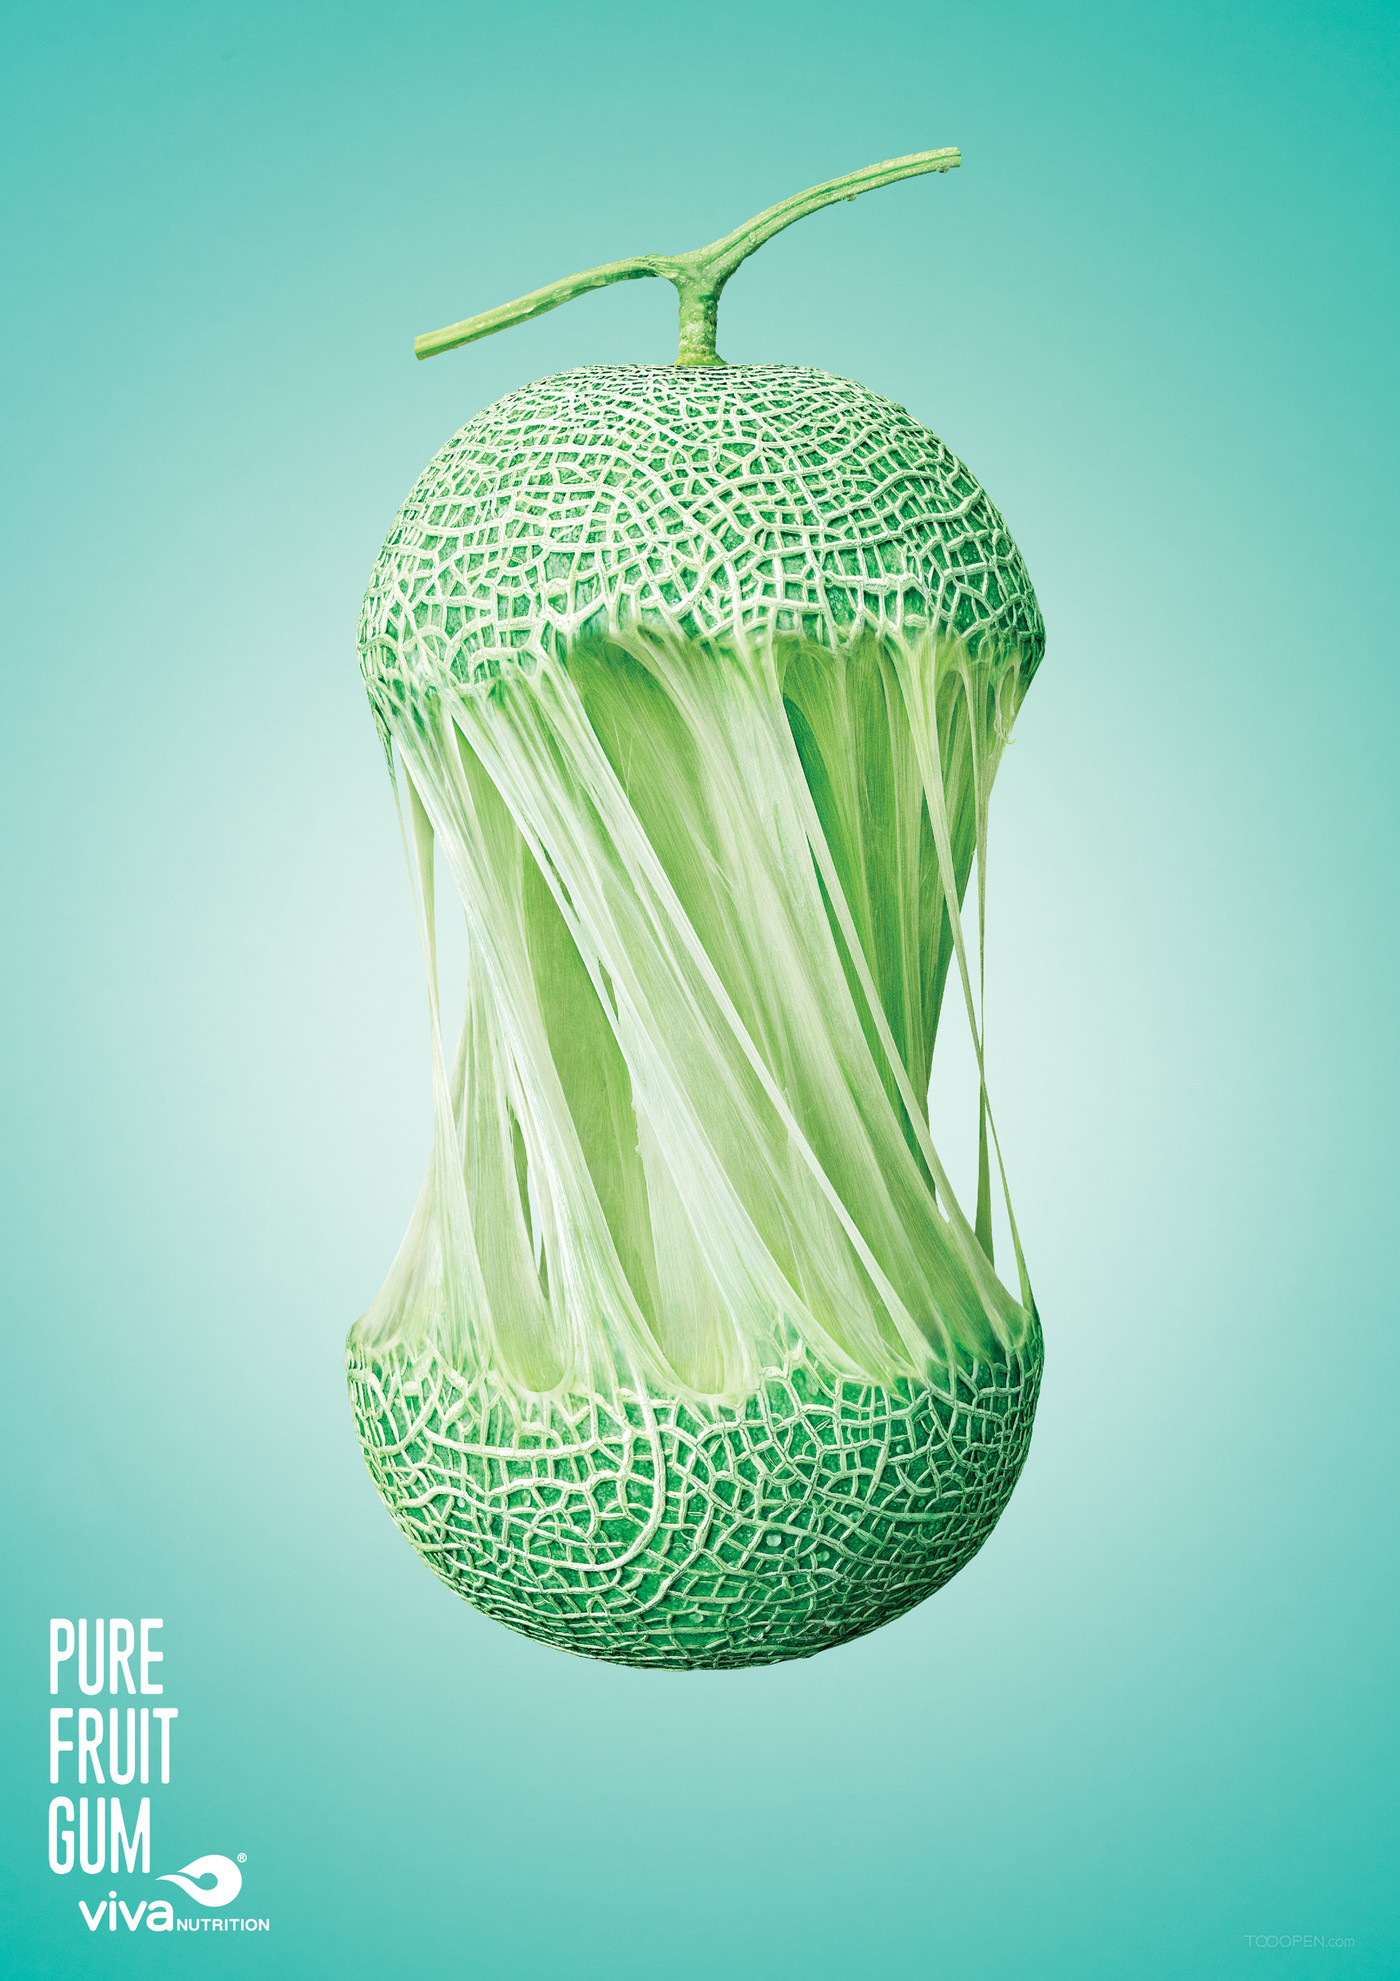 Viva Nutrition纯果胶创意广告海报设计欣赏-02